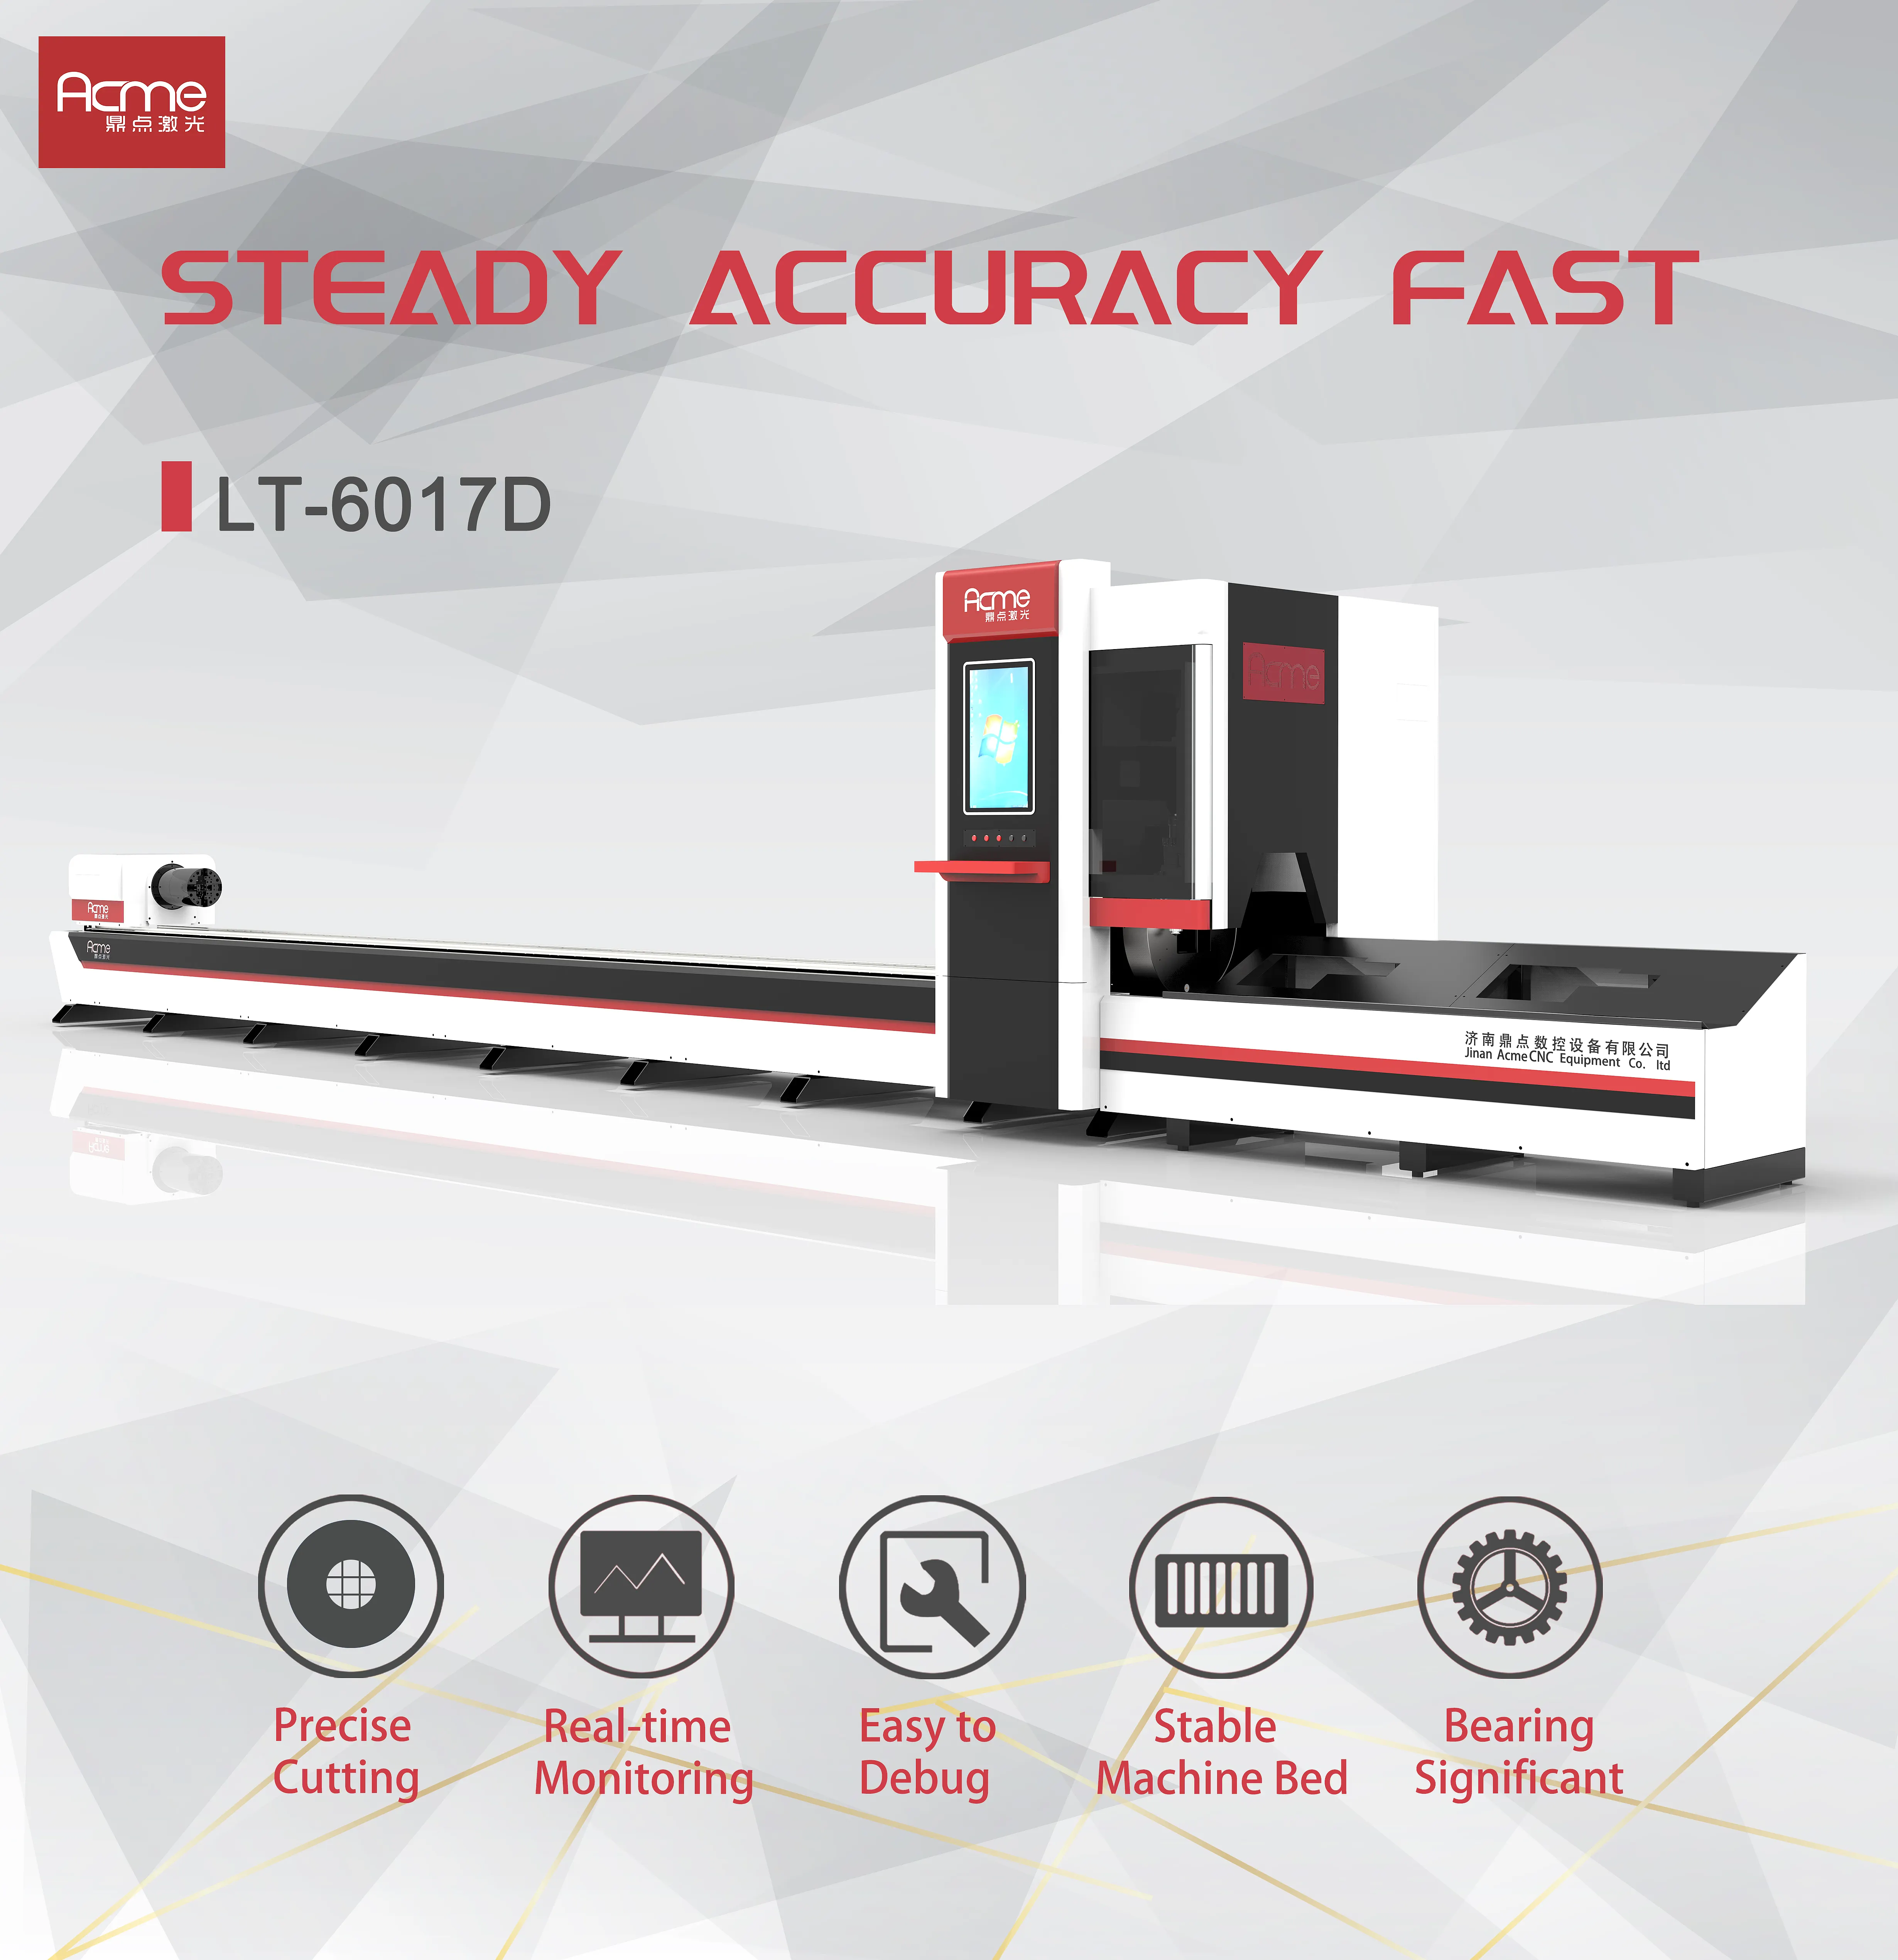 high performance-price ratio D model tube laser cutting machine